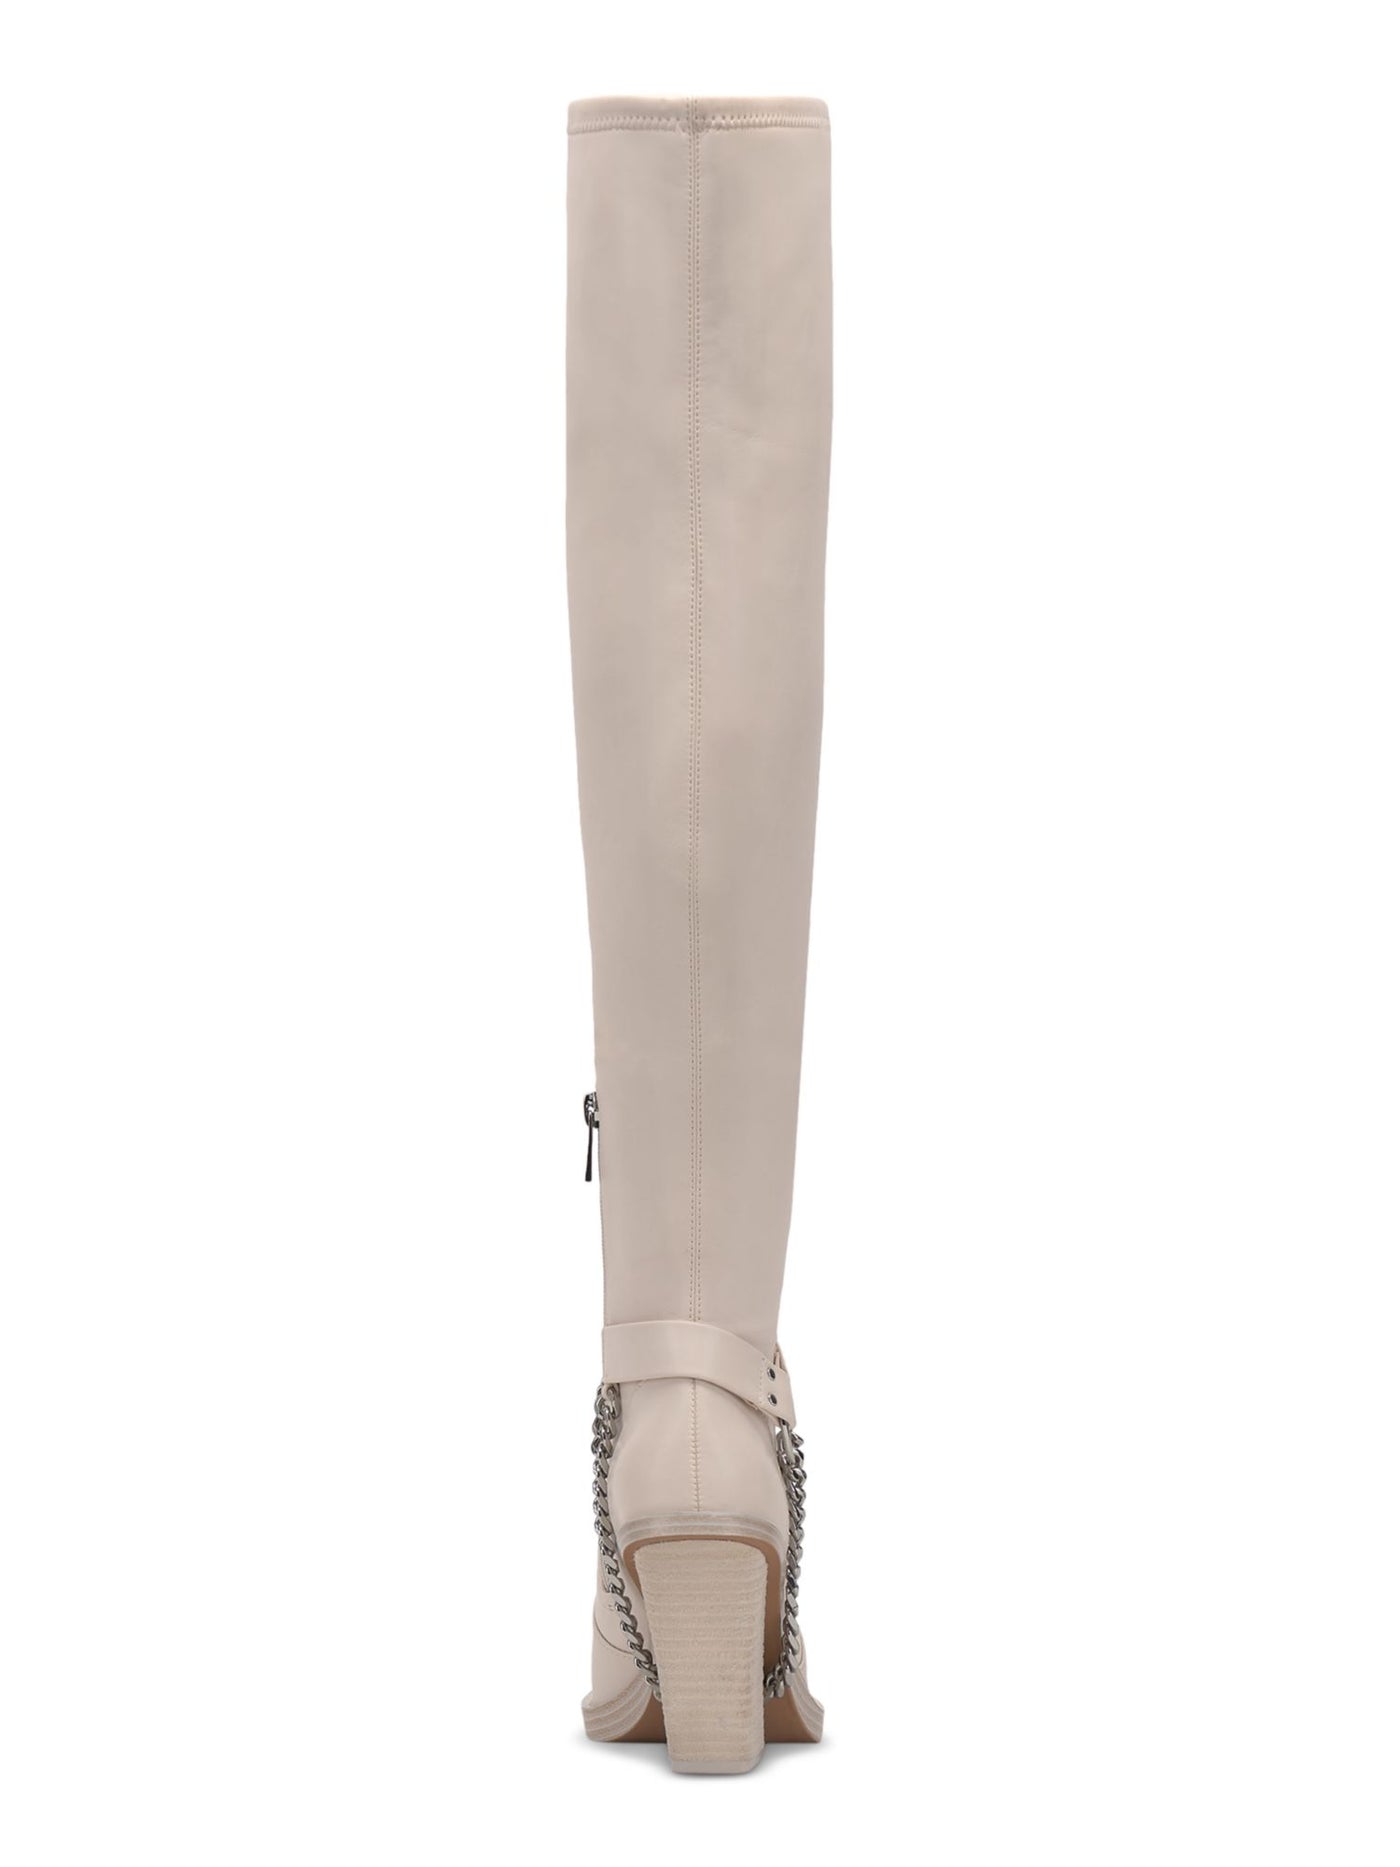 JESSICA SIMPSON Womens Beige Comfort Langer Pointed Toe Block Heel Dress Boots 8 M